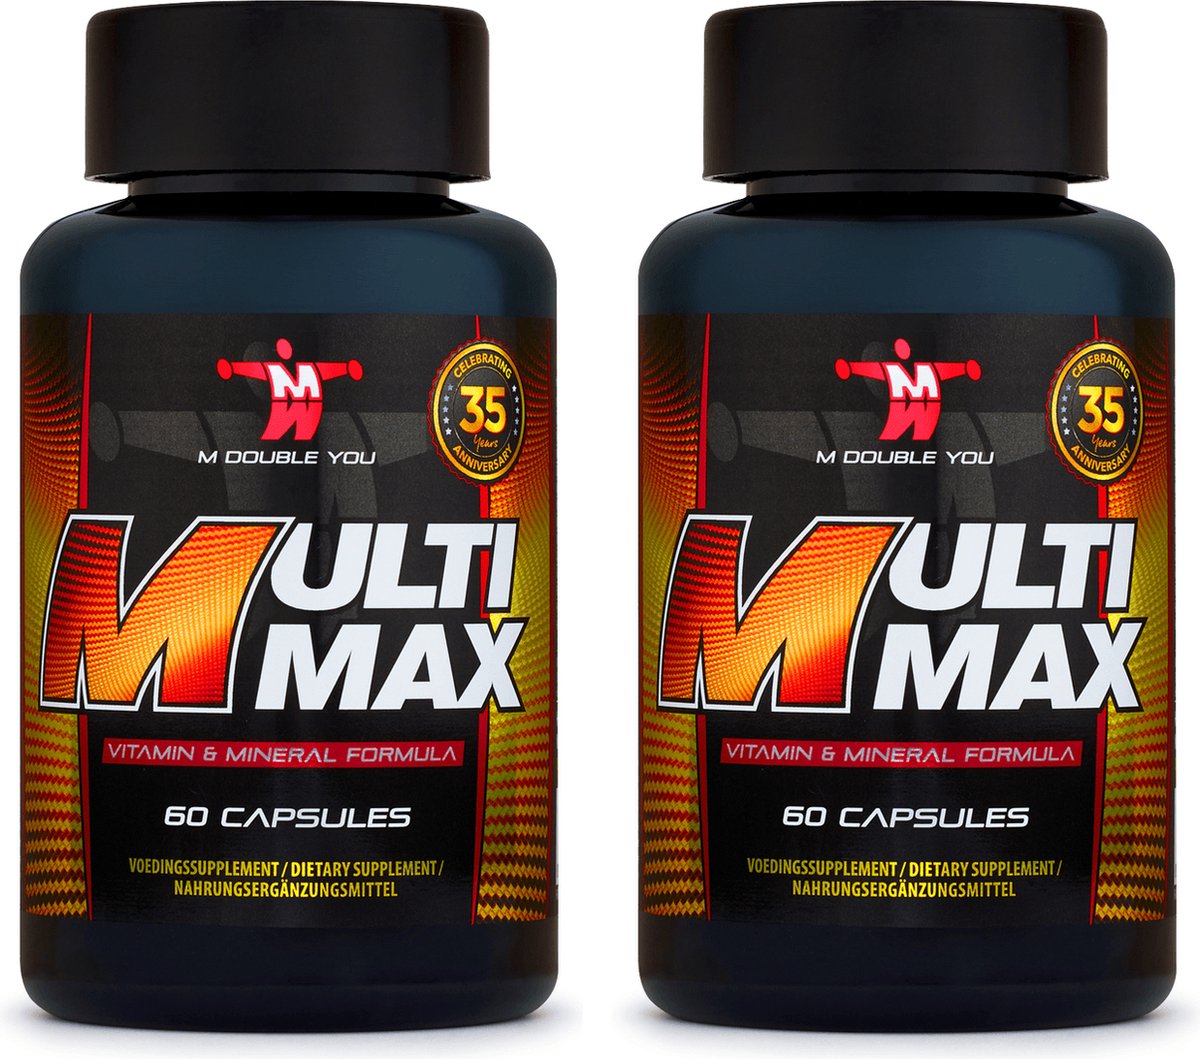 M Double You - Multi Max (2 x 60 capsules) - Duopack - Multivitaminen & mineralen